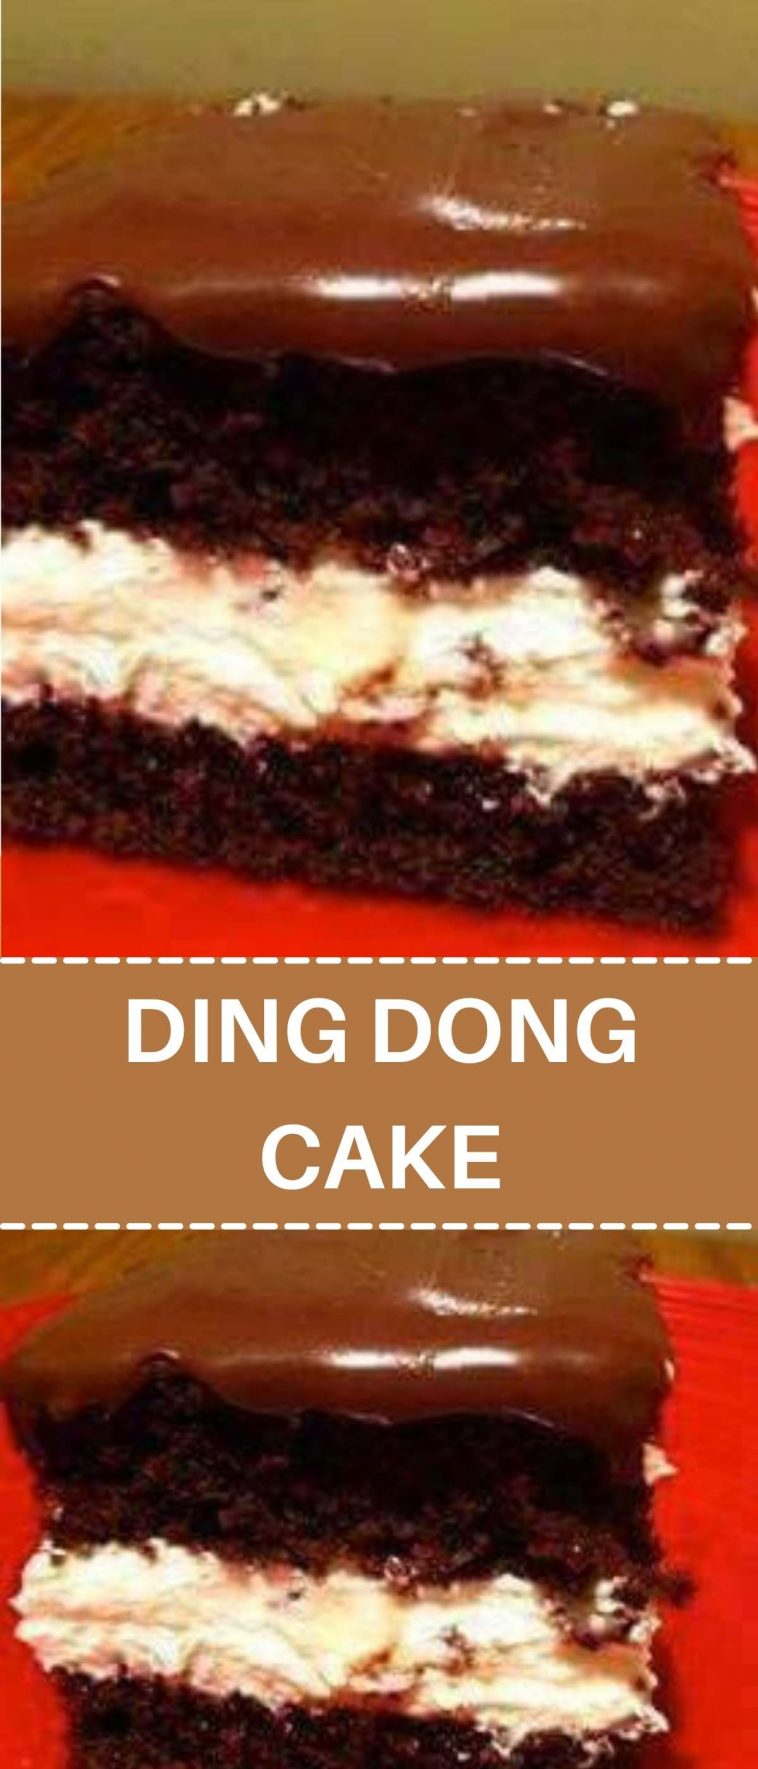 DING DONG CAKE